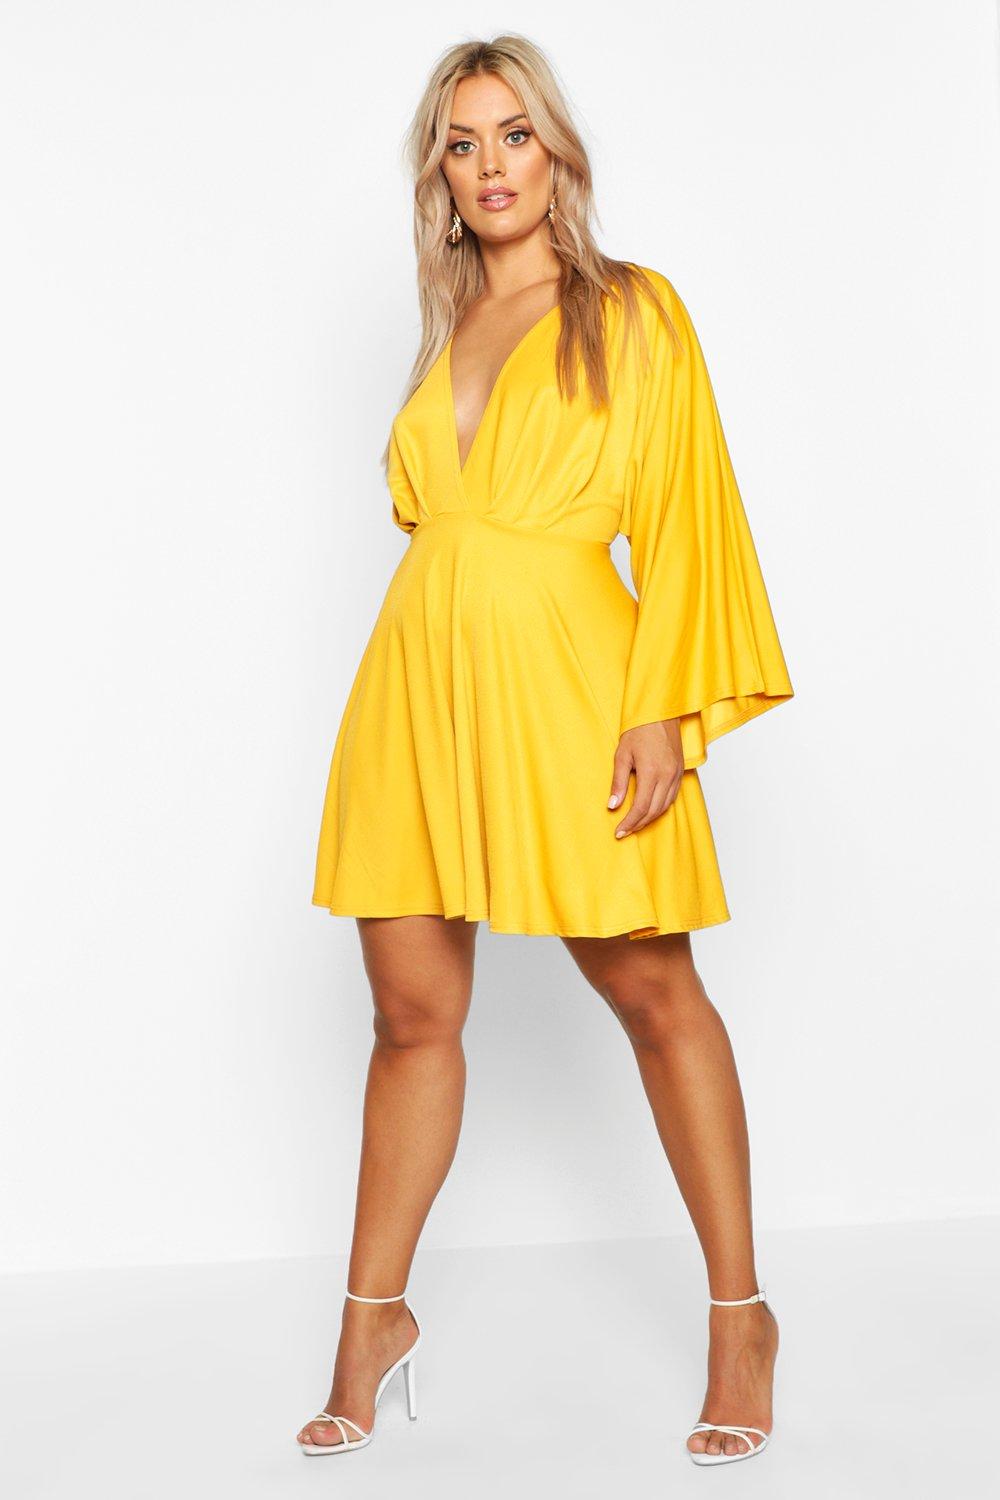 boohoo mustard dress